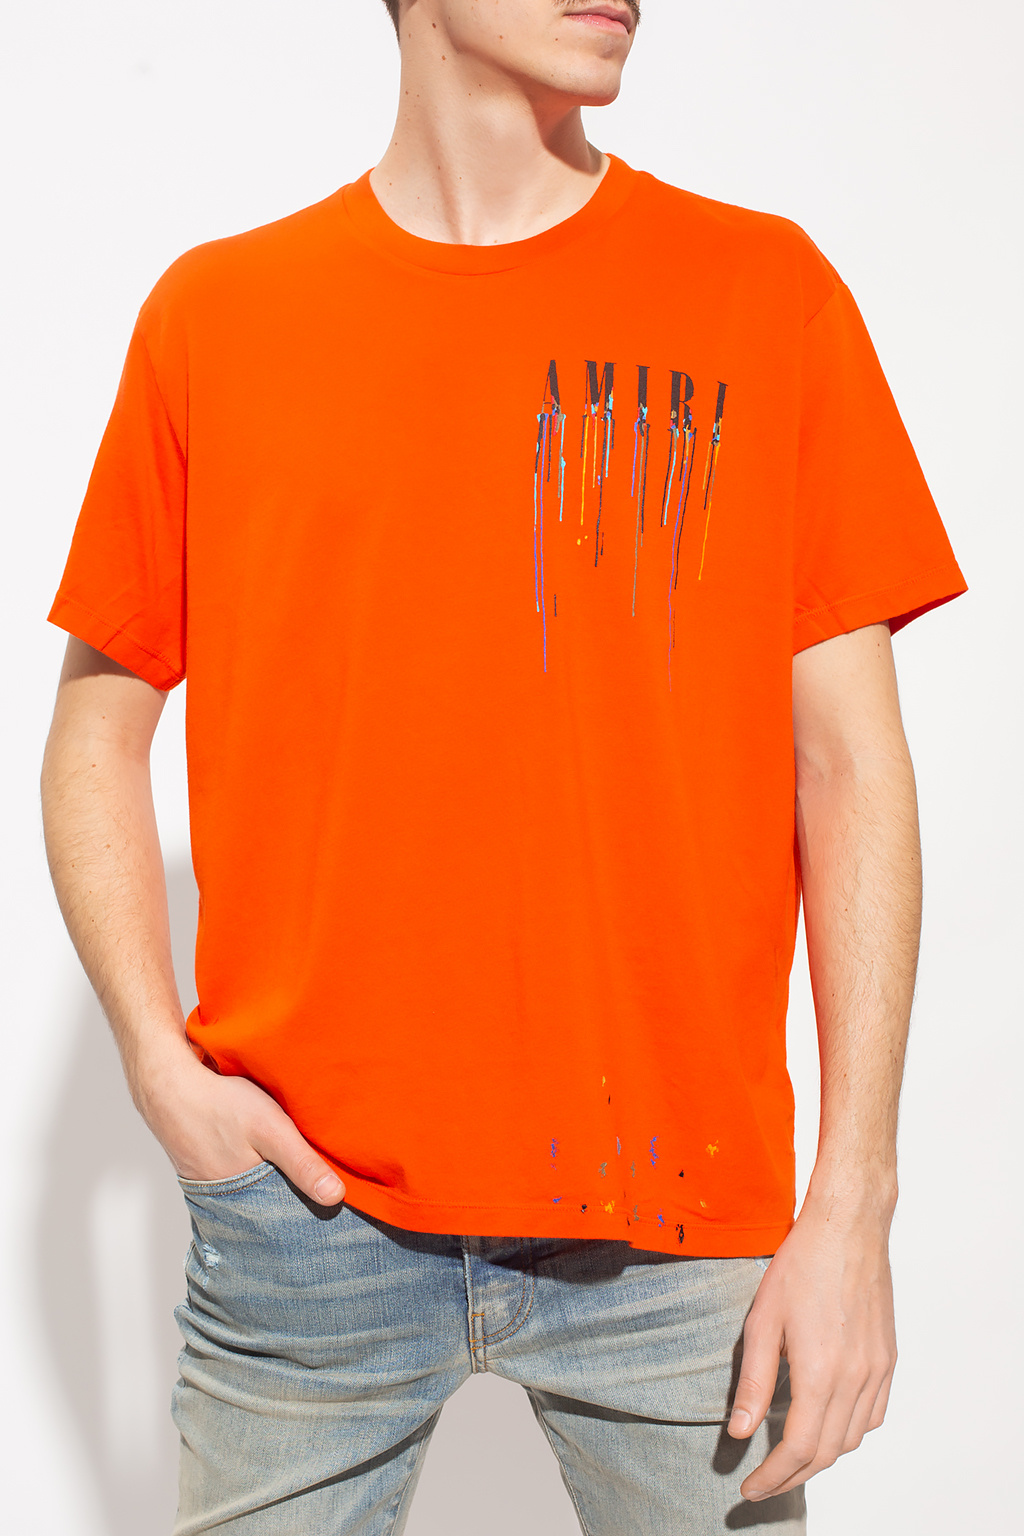 Nike Air Hooded Woven Orange Amiri - with Wind Guyana logo Mens shirt T Jacket - IetpShops 